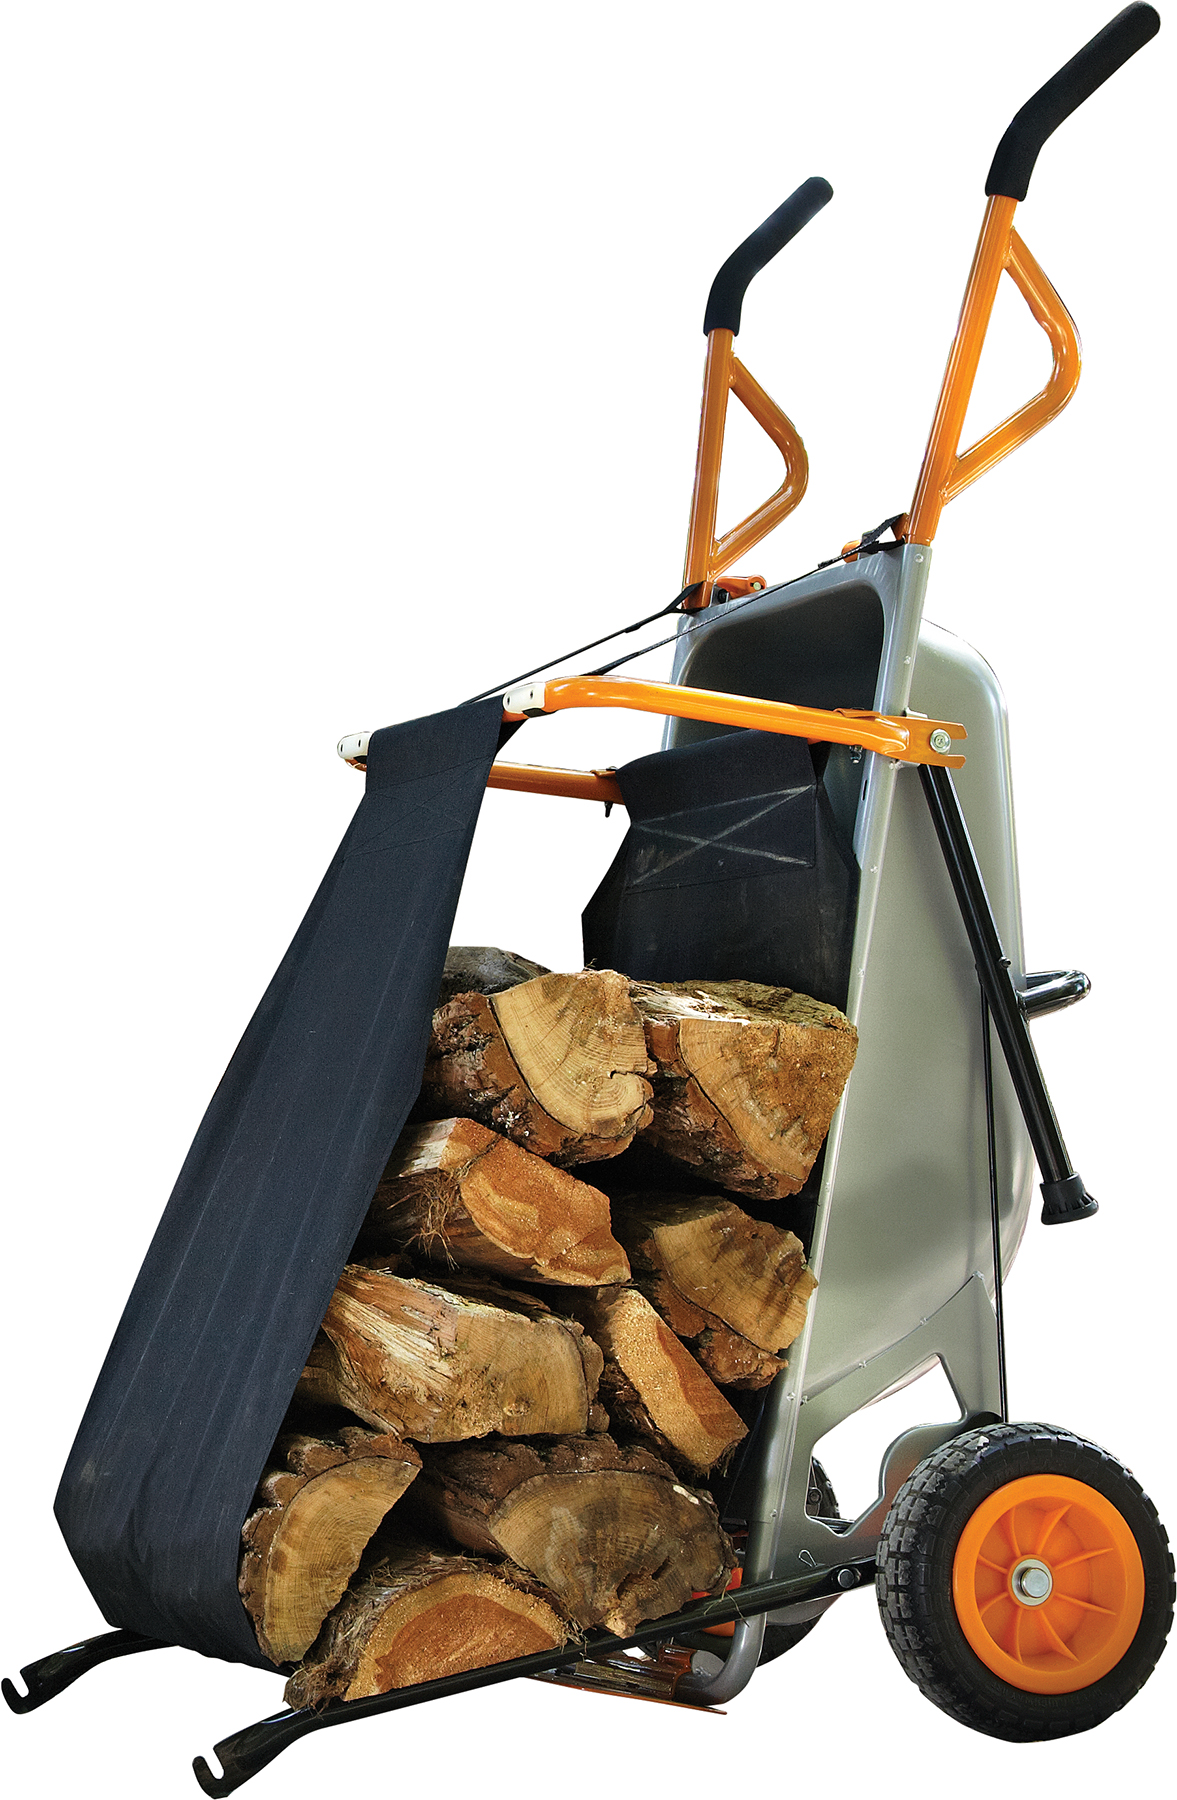 WORX Aerocart with Firewood Carrier Attachment